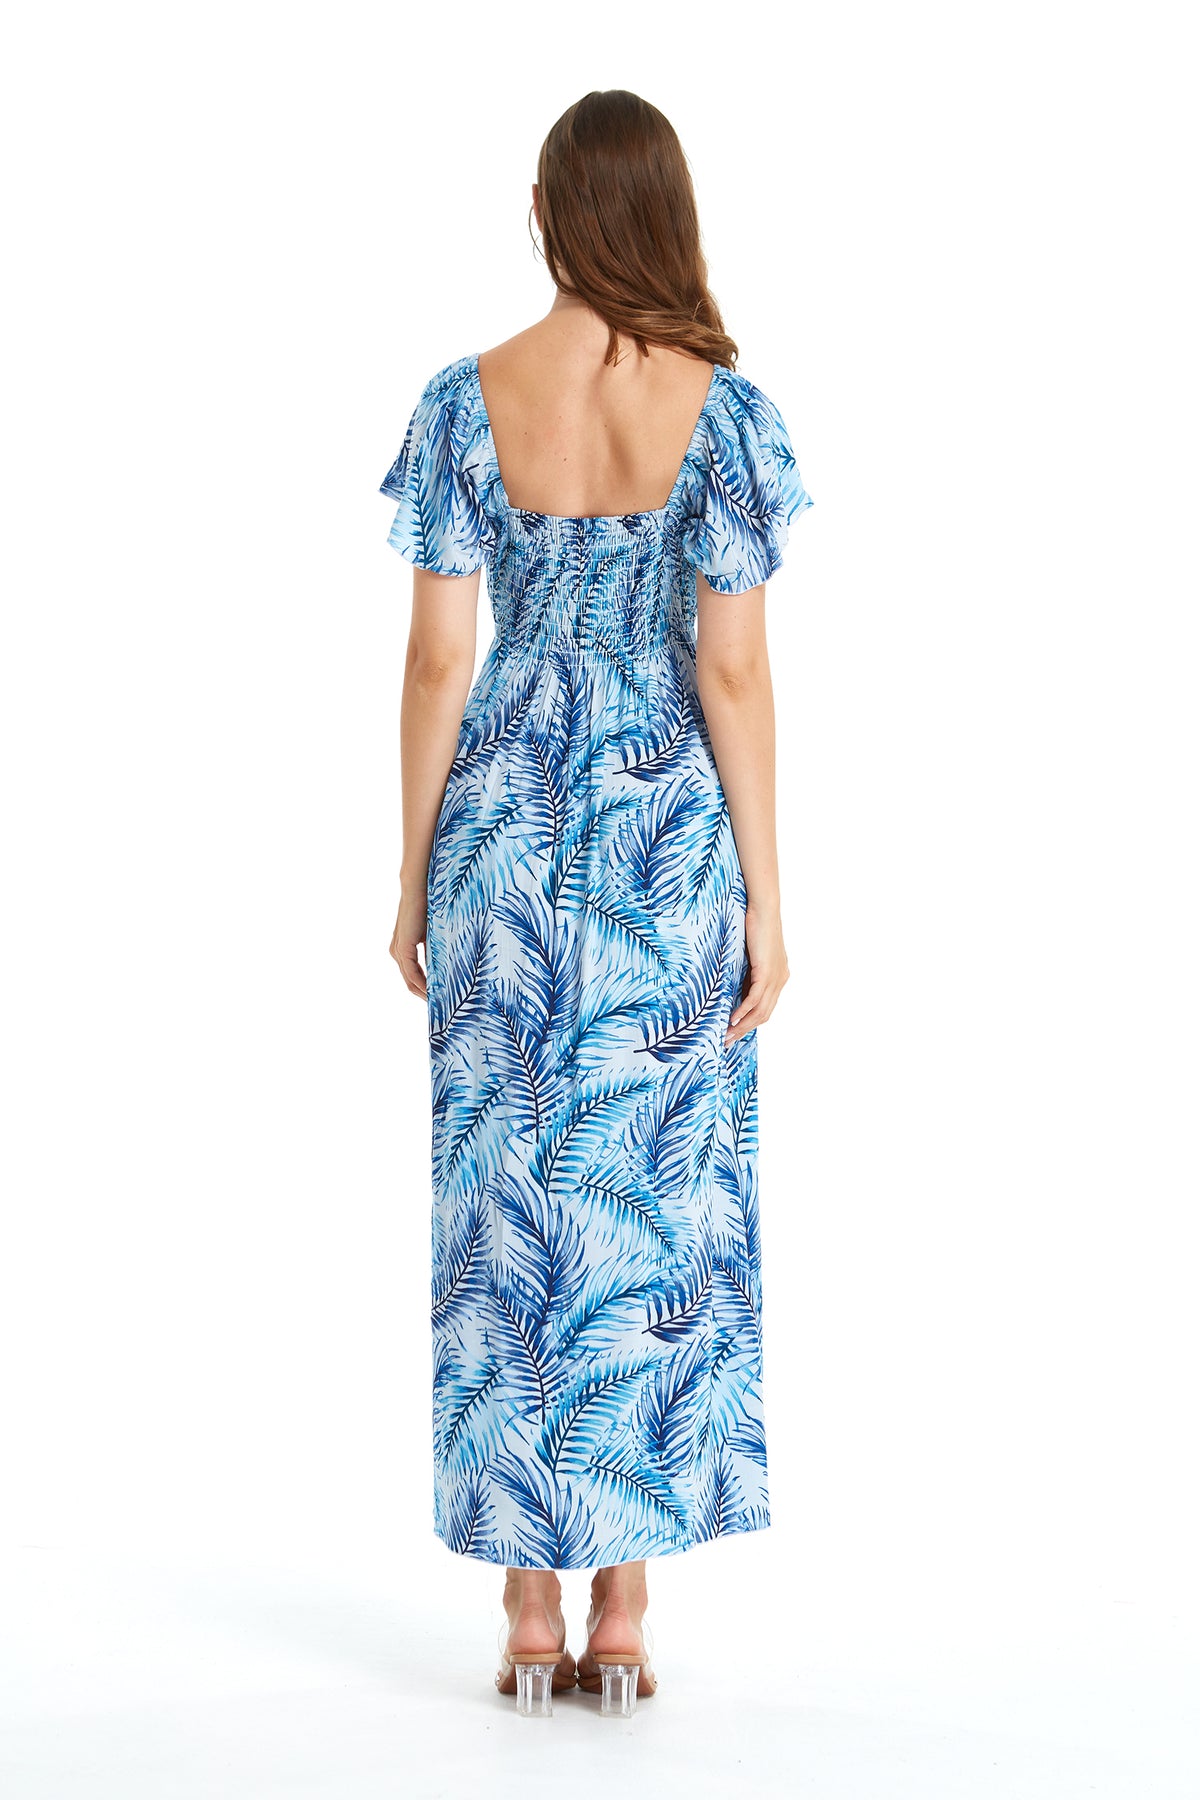 Women's Maxi Rahee Dress Simply Blue Leaf – Hawaii Hangover